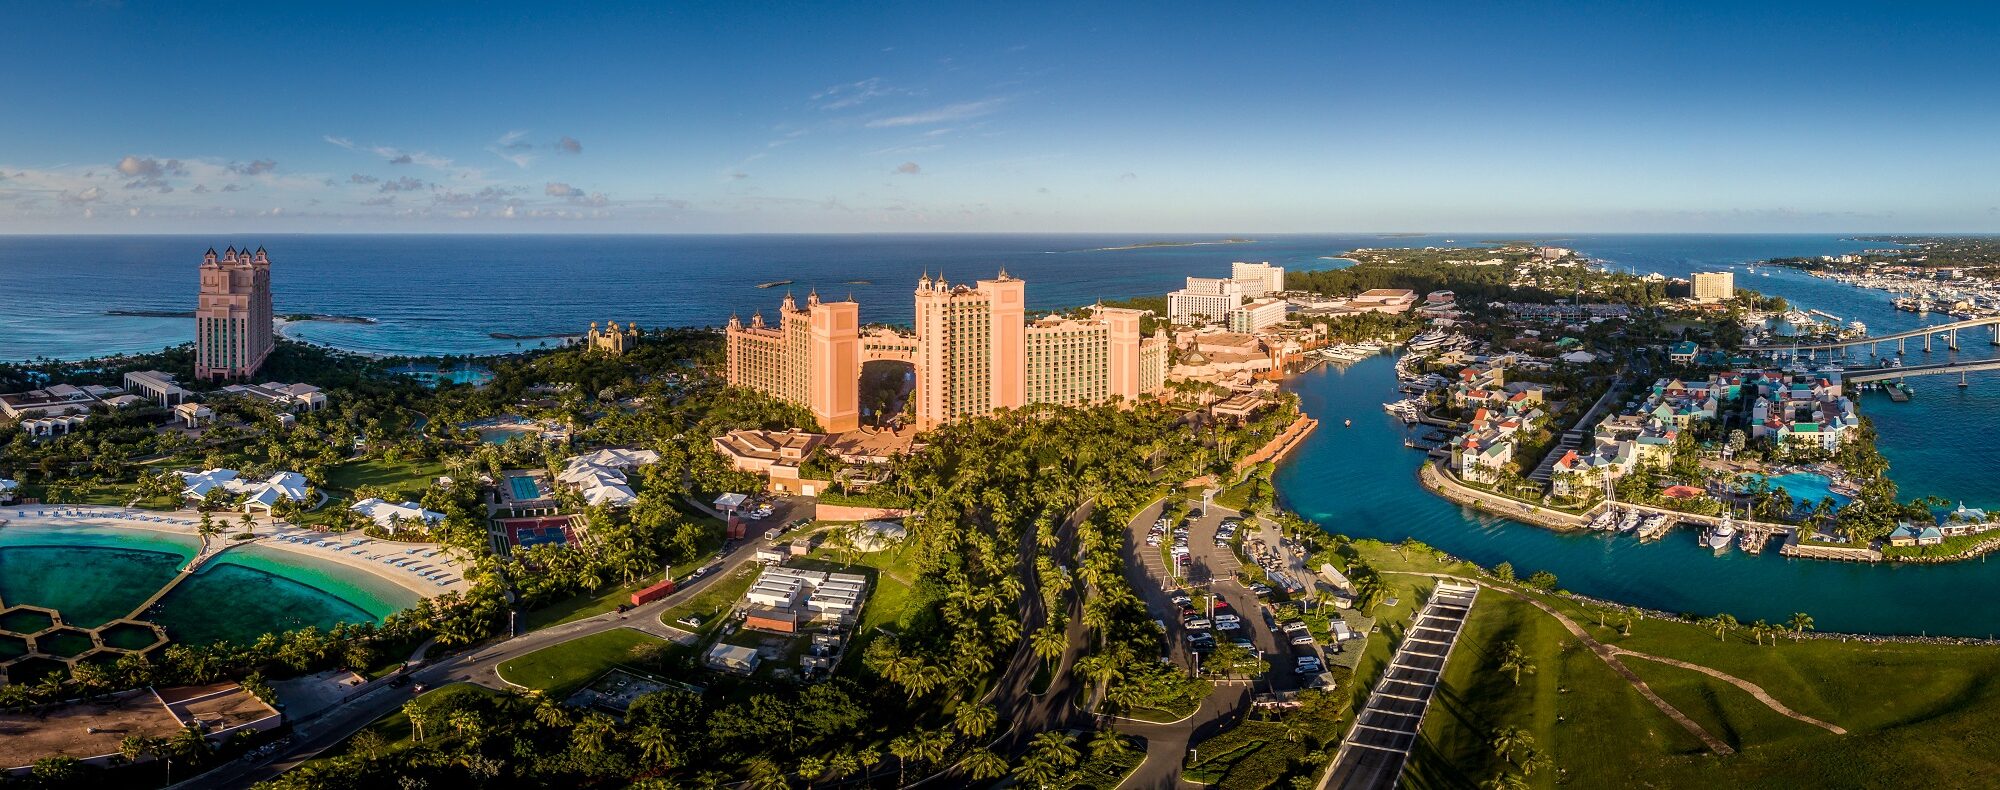 Hotels in Nassau Bahamas